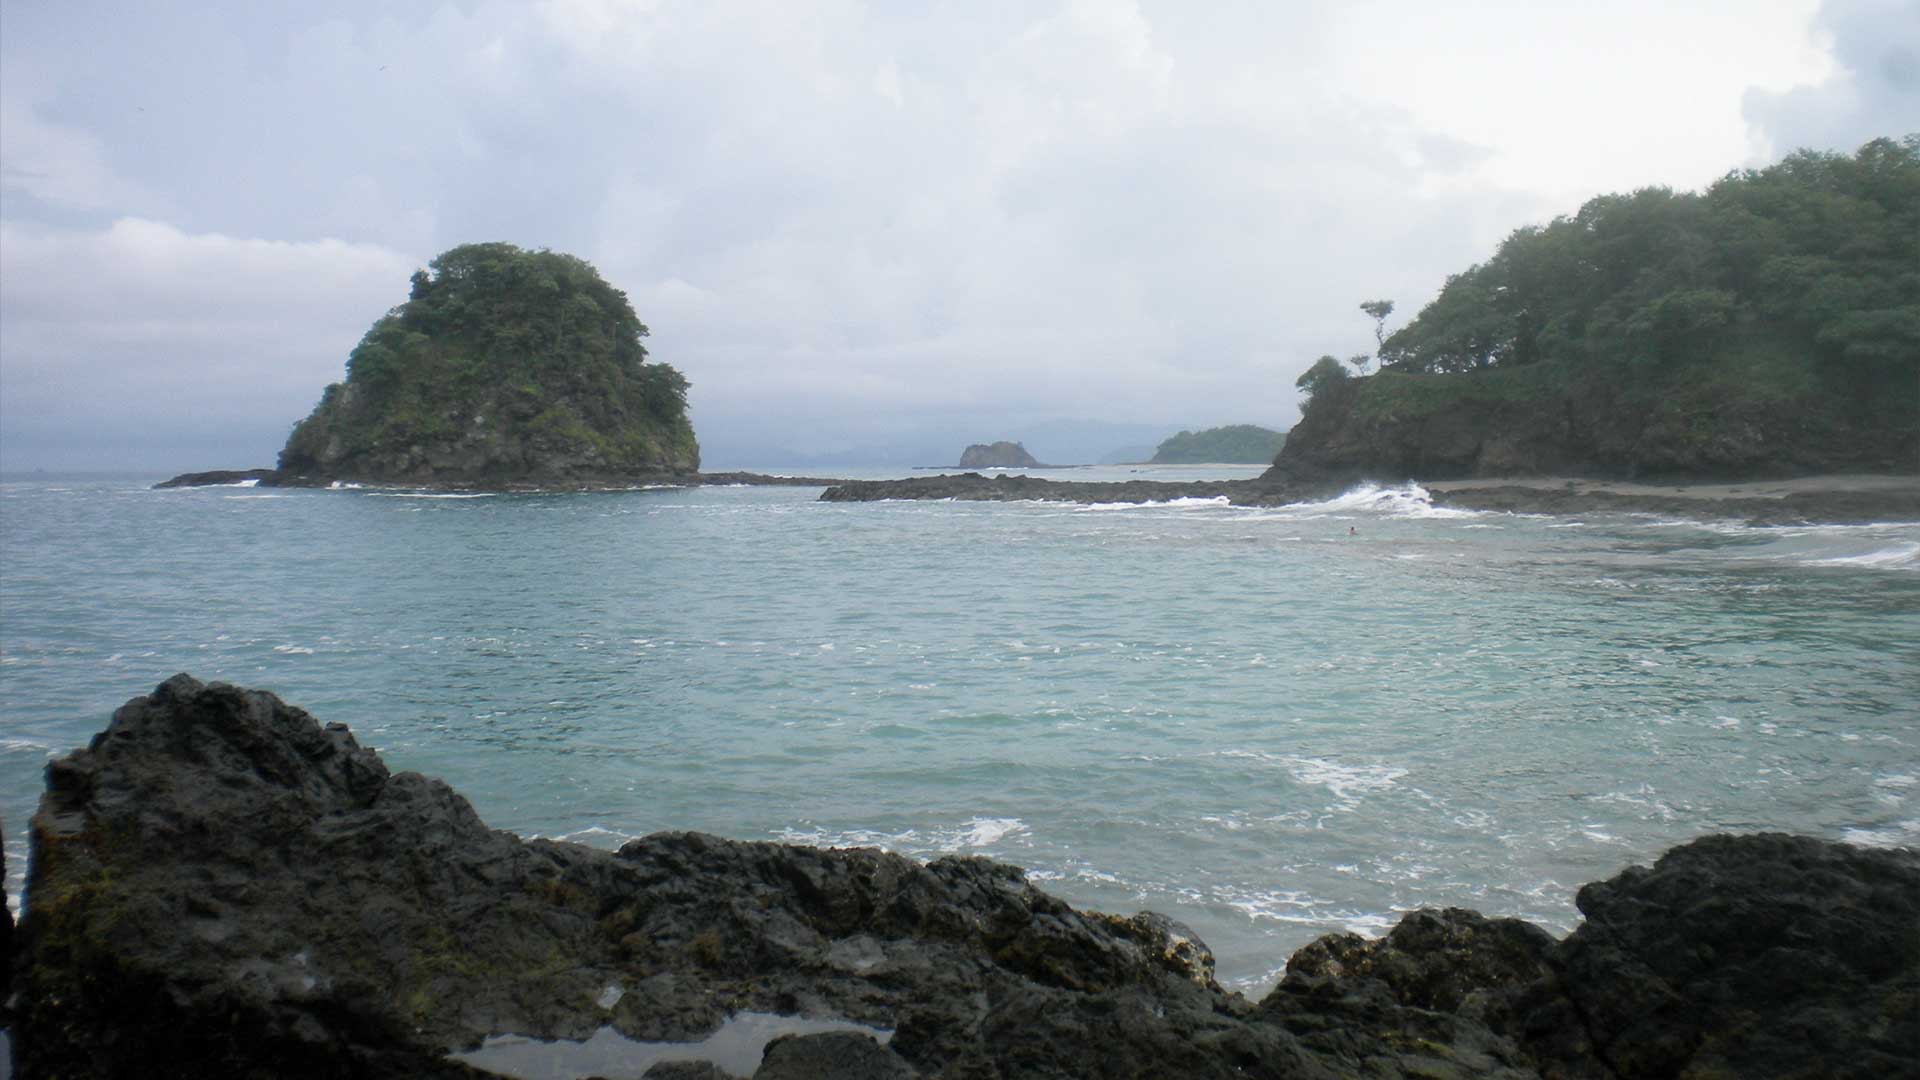 Black rocky beach with small islands in Guanacaste, Costa Rica